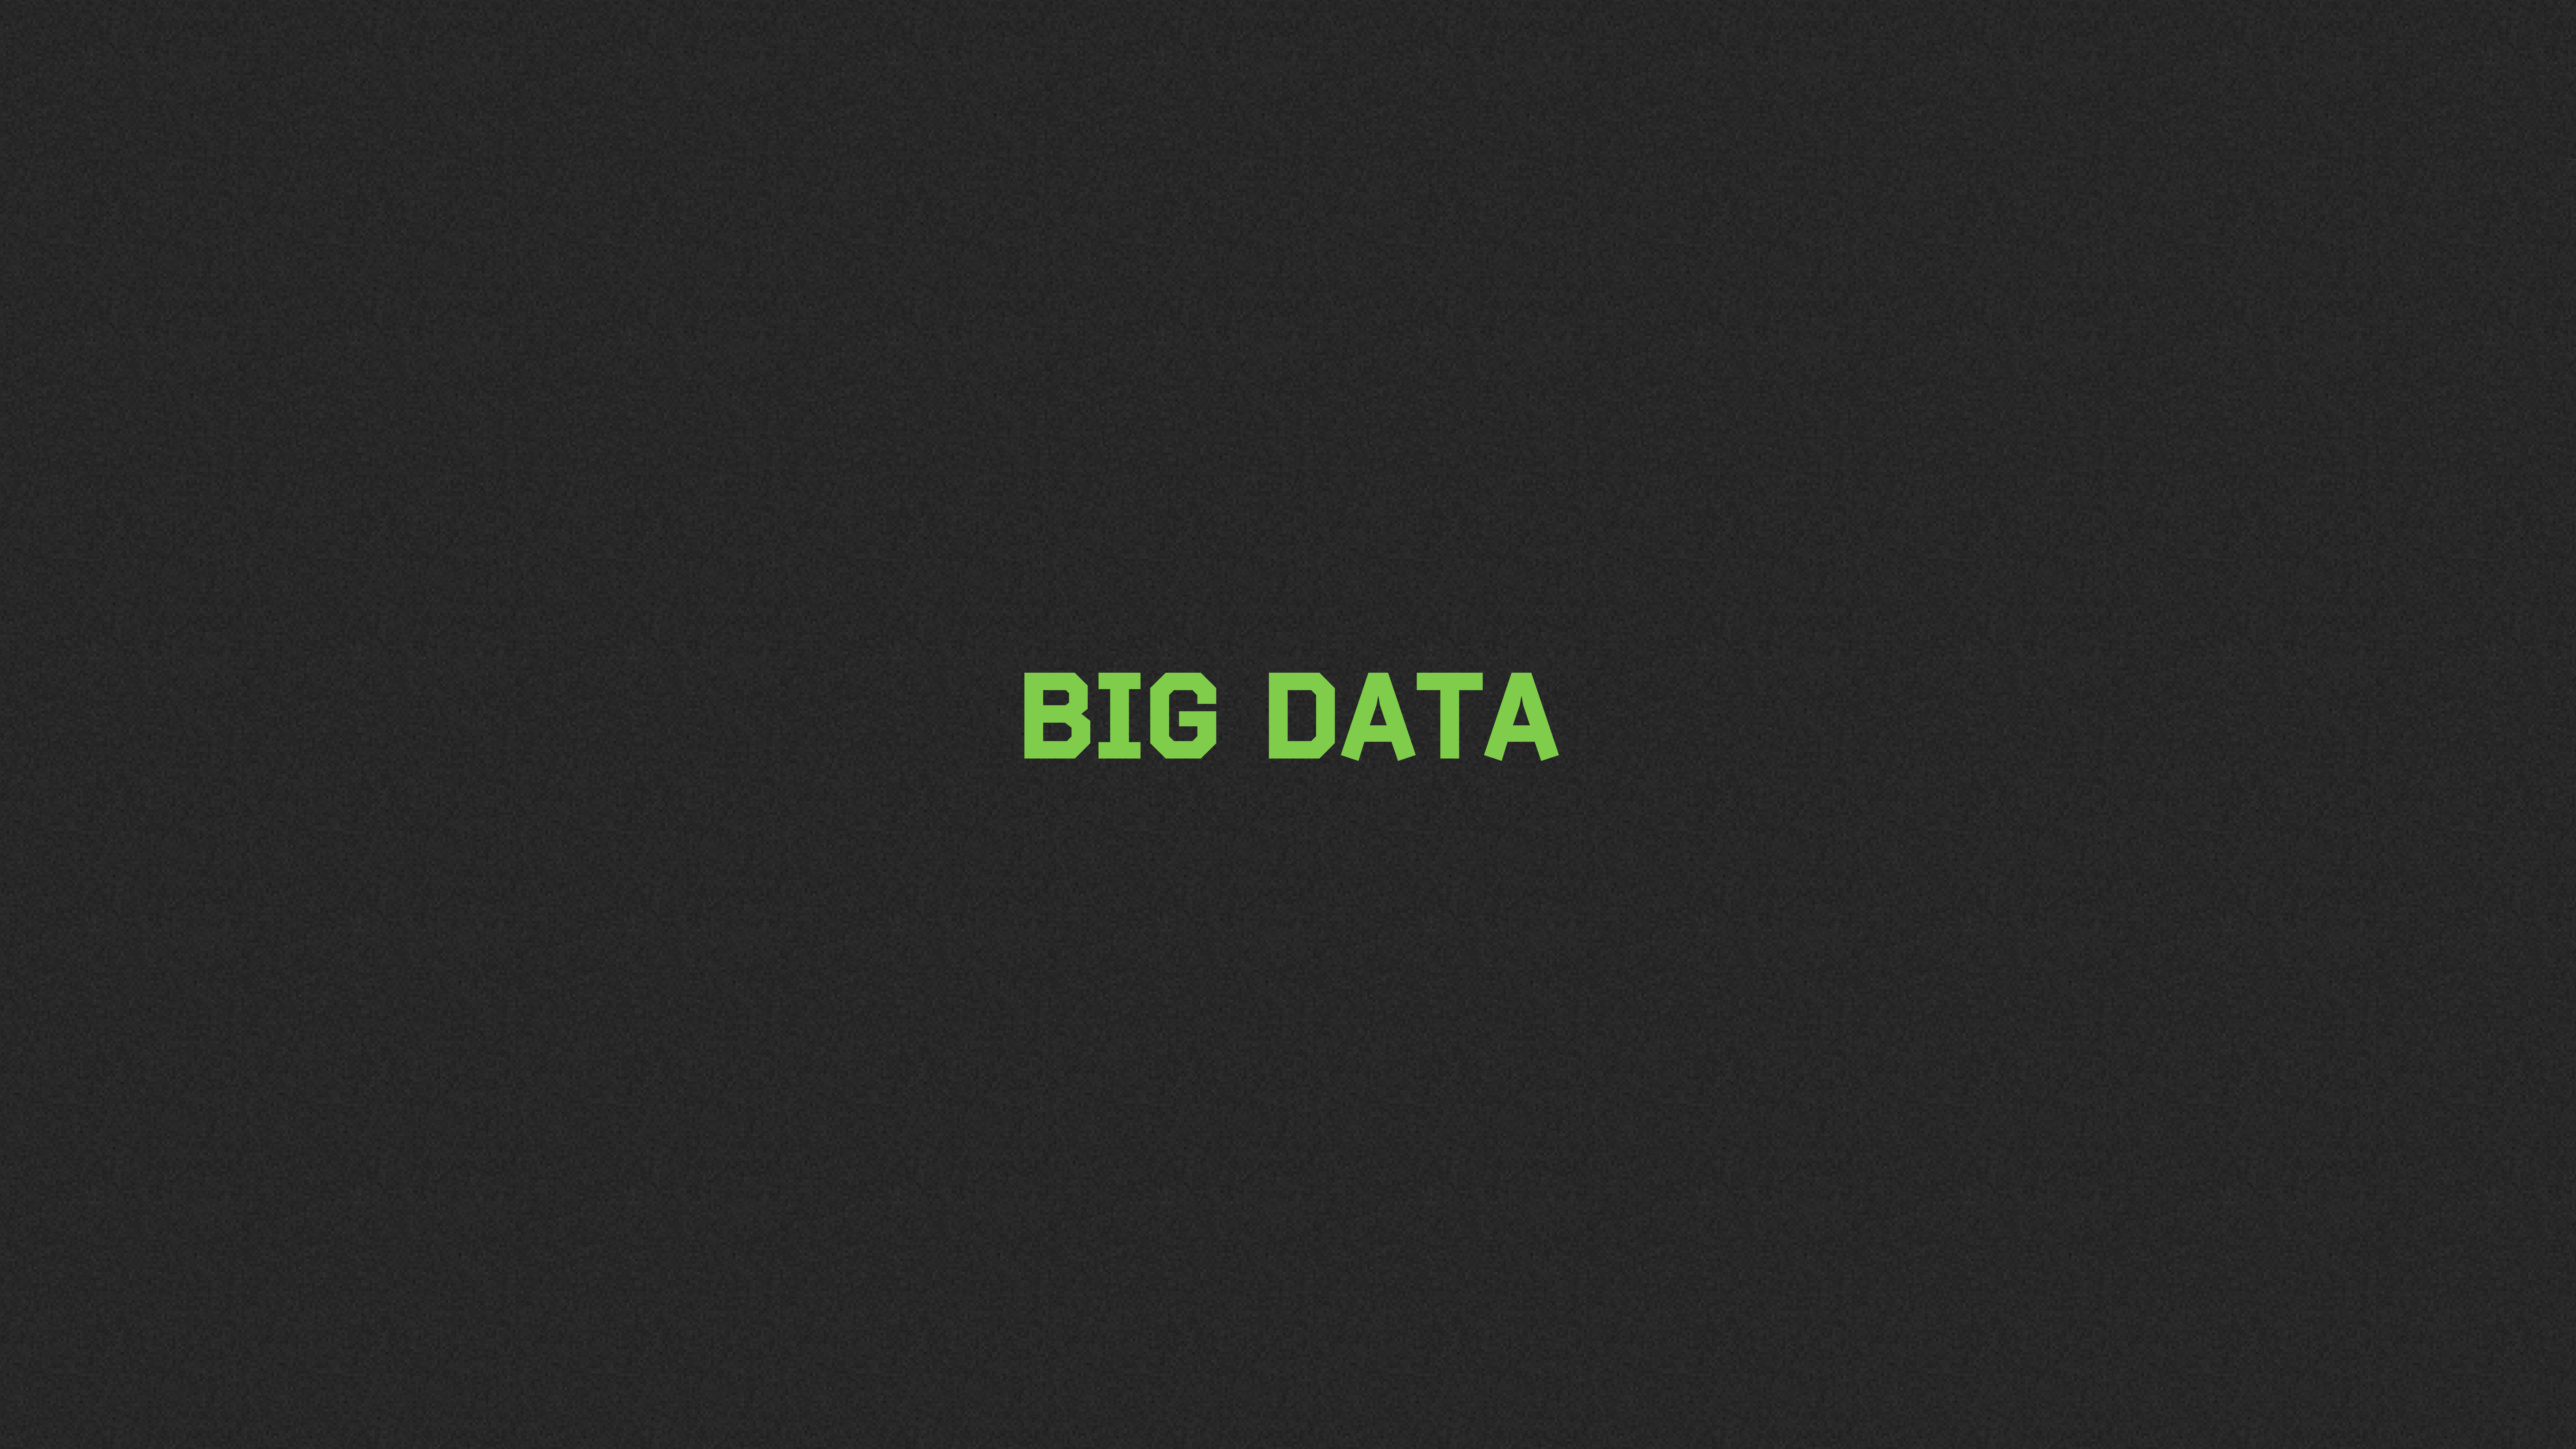 Реферат Big Data